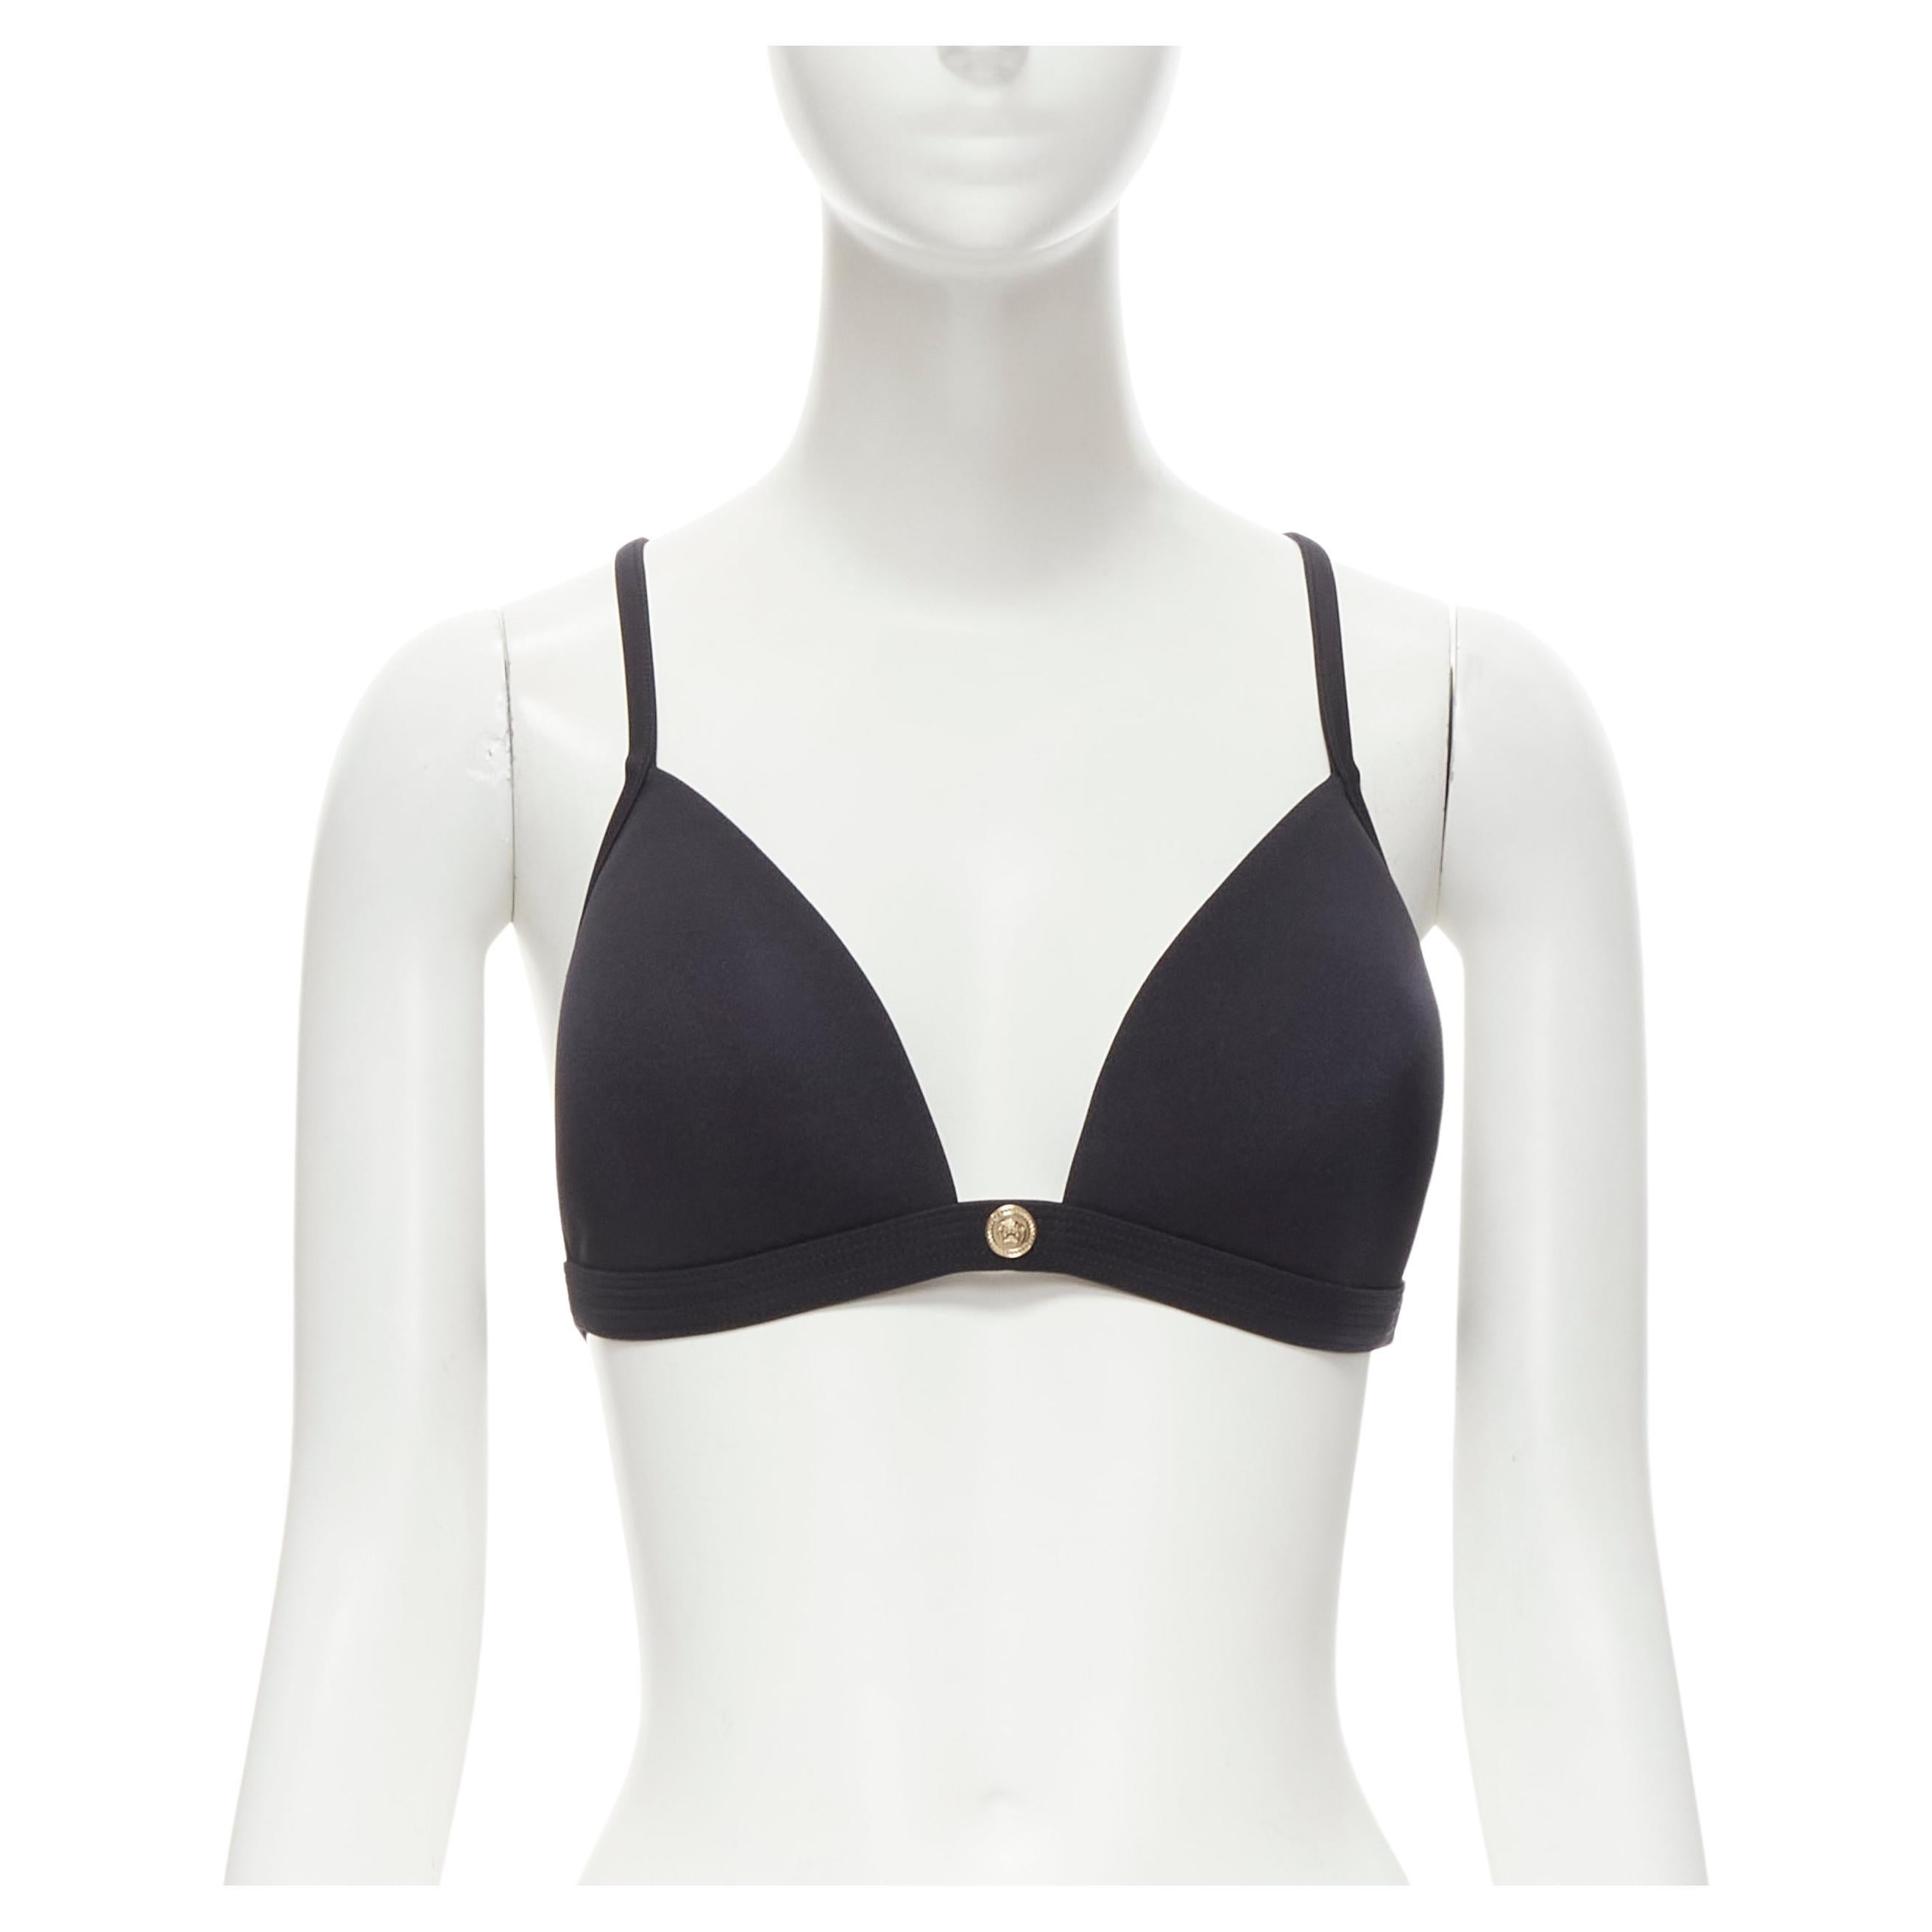 new VERSACE Beachwear black padded gold Medusa button triangle bikini top Sz.4 M For Sale